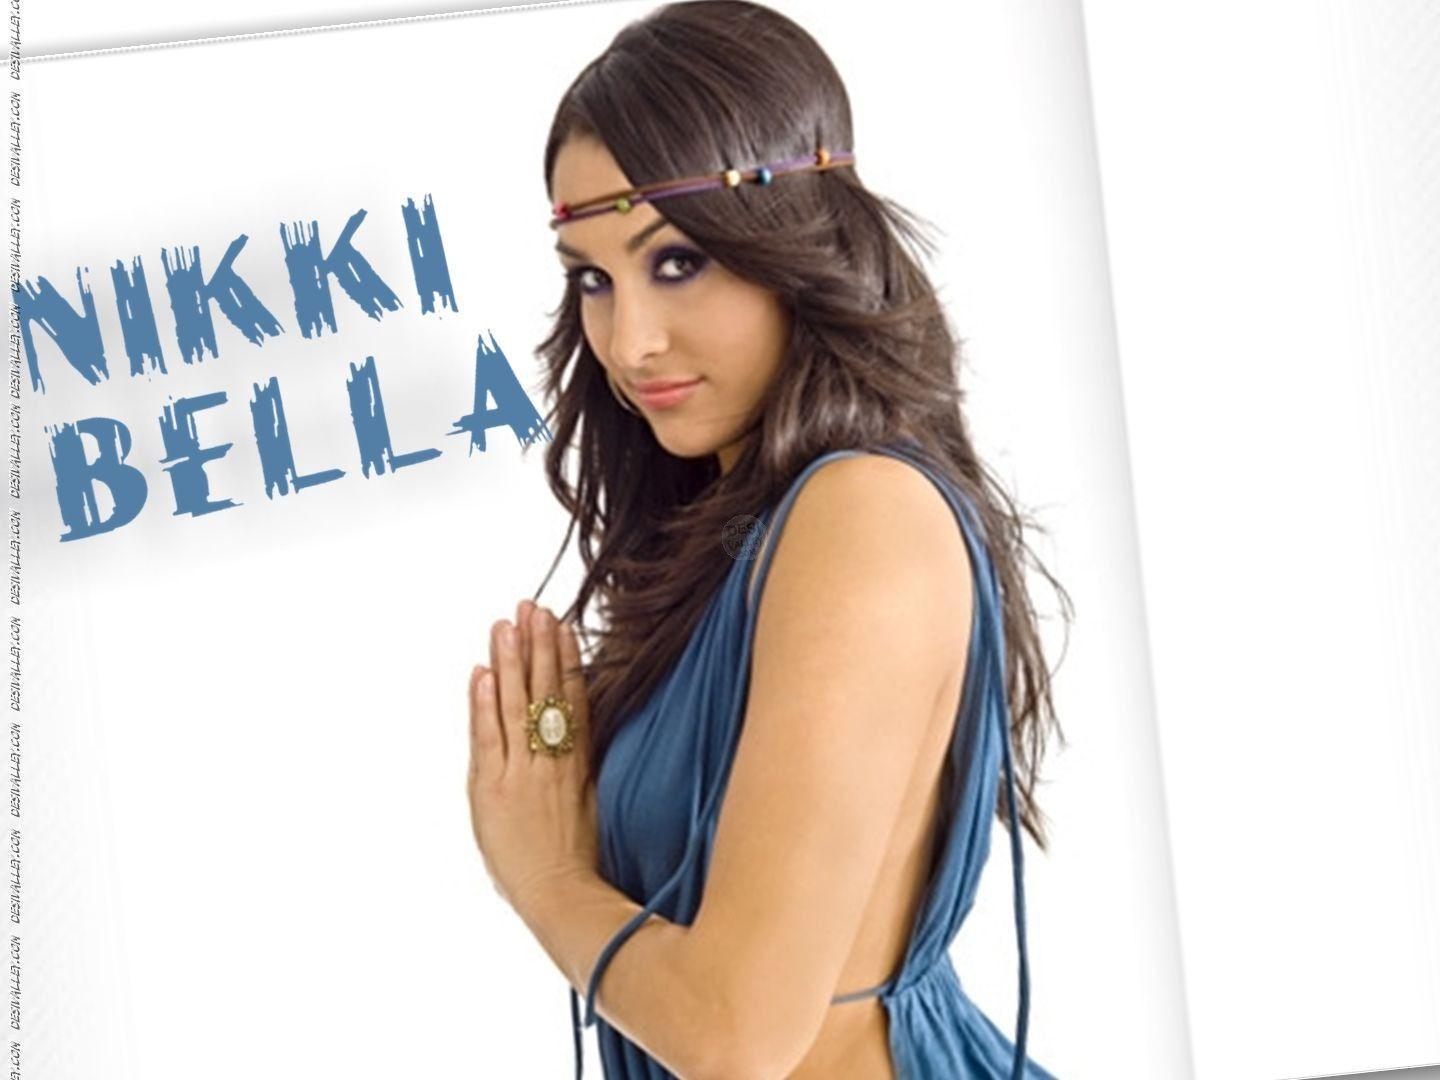 WWE Nikki Bella Fearless Wallpapers